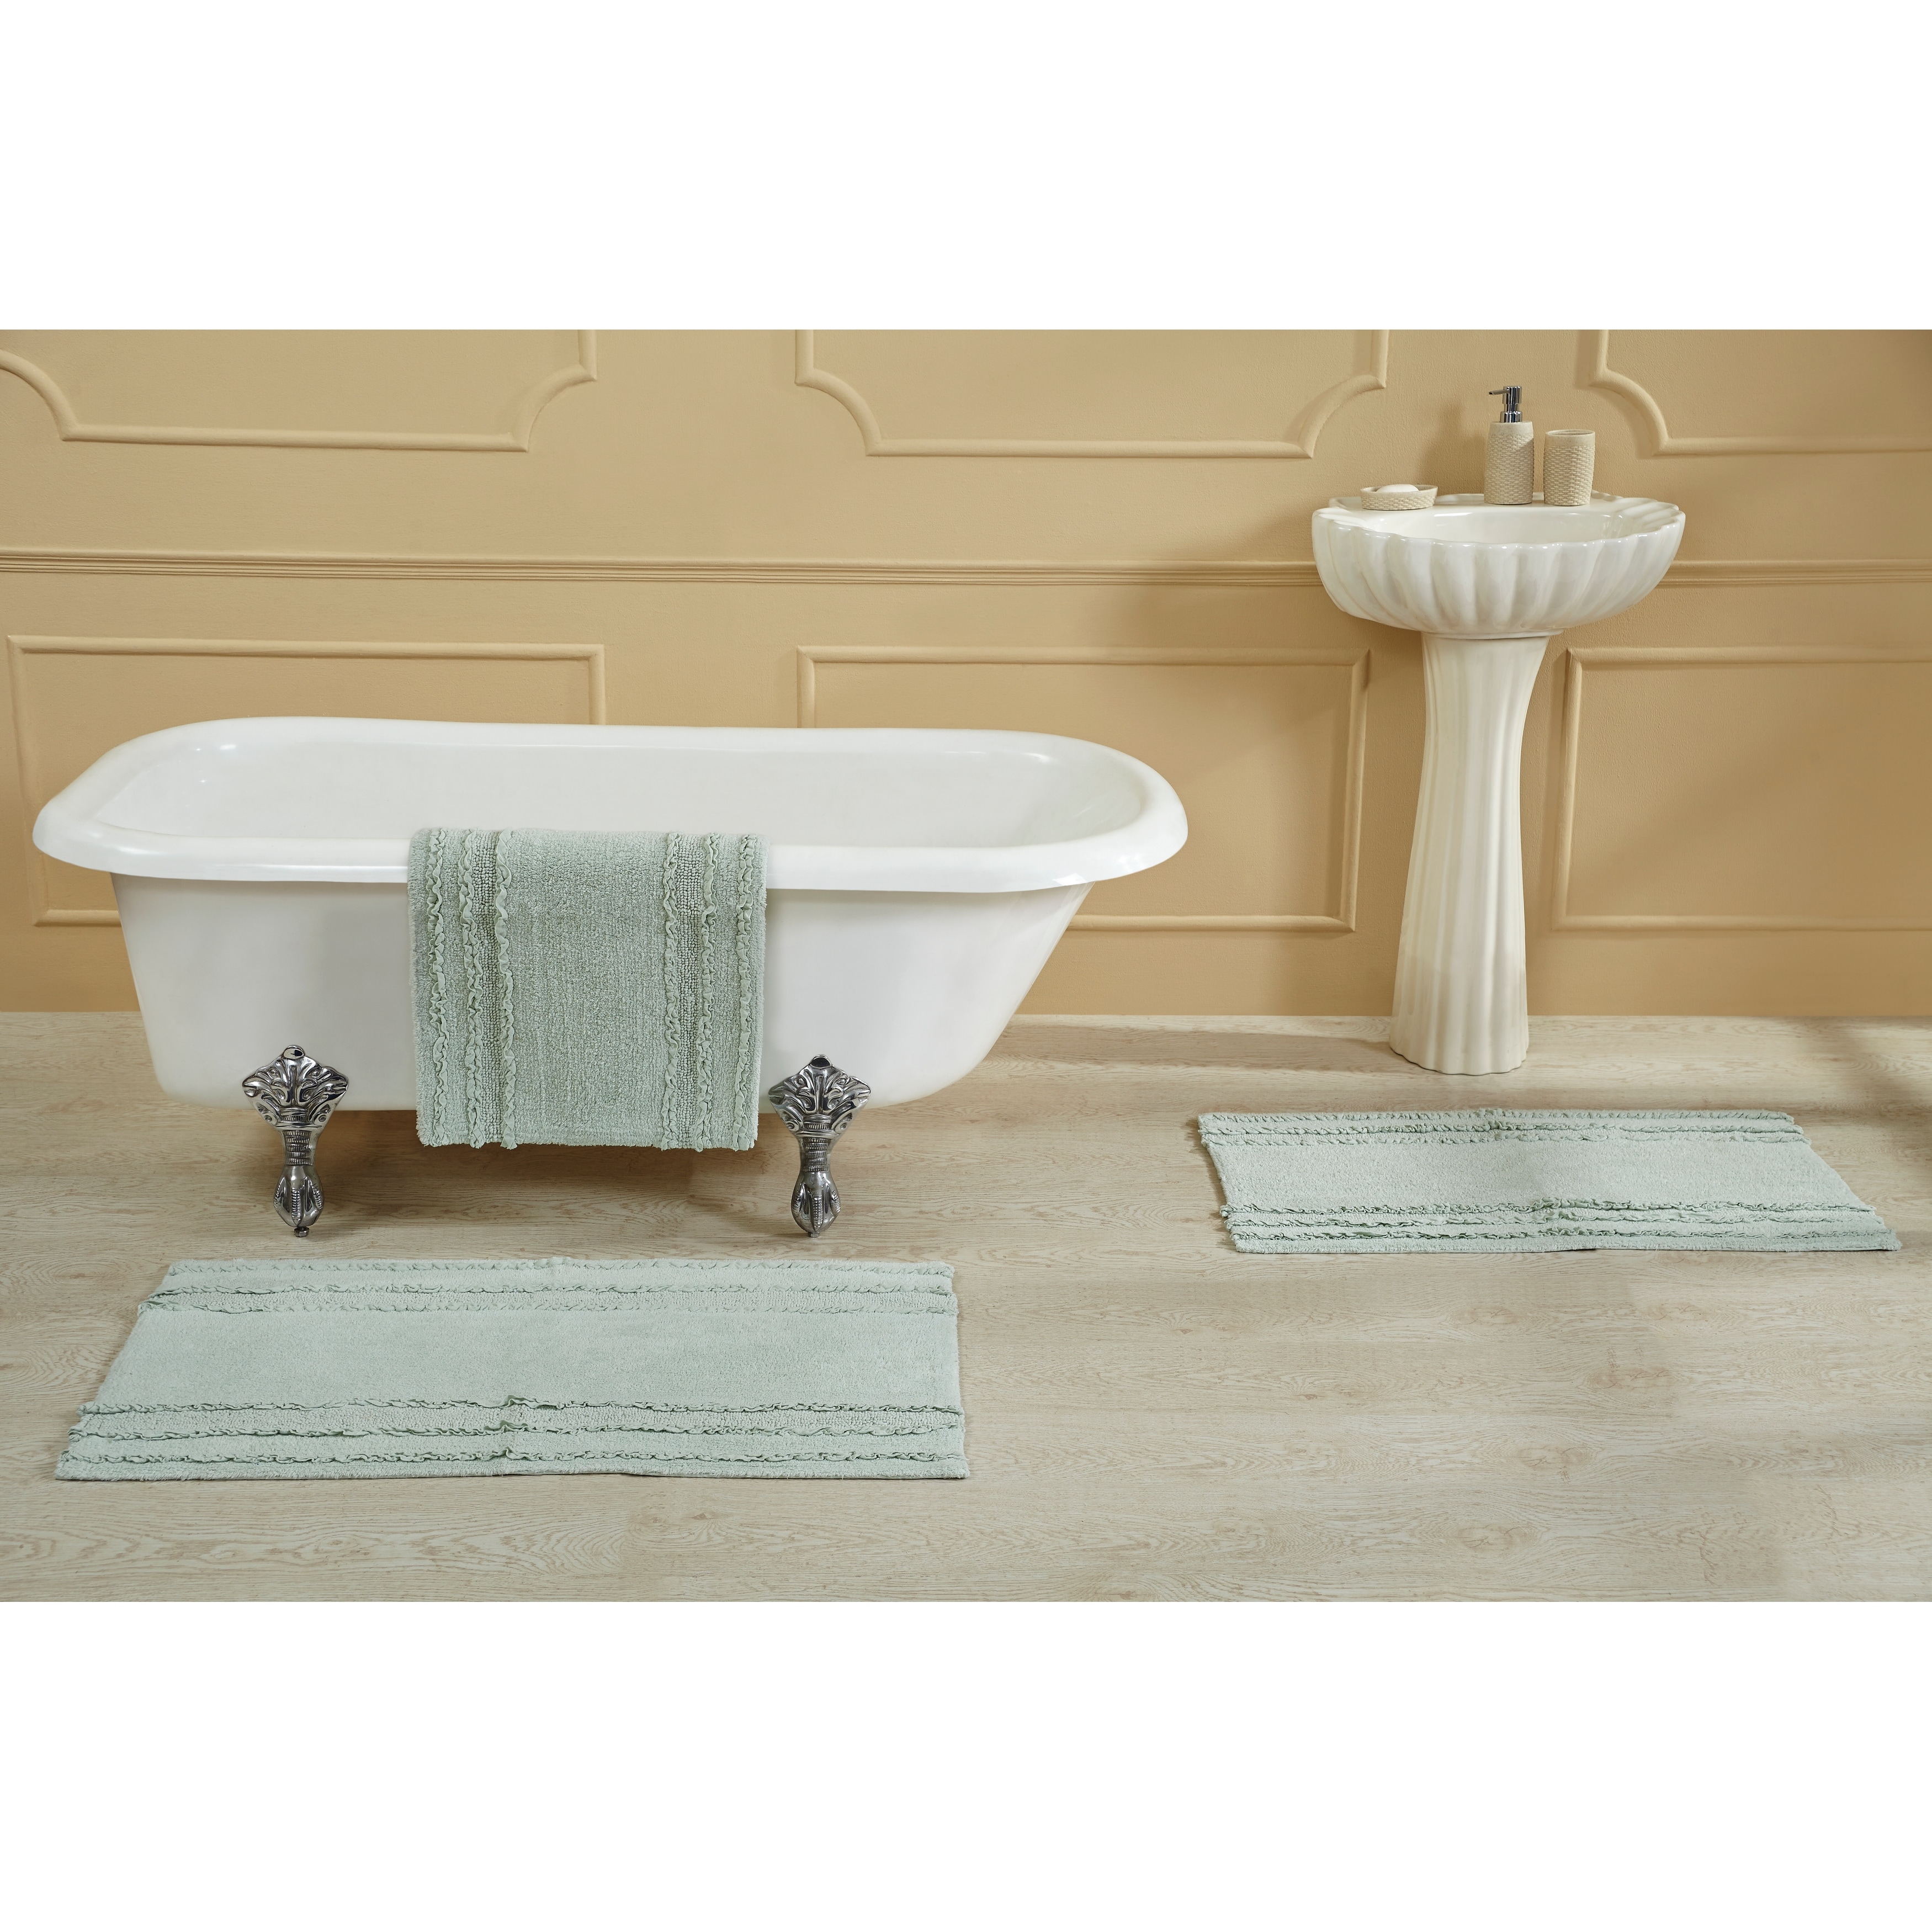 Better Homes & Gardens Thick & Plush Bath Rug, Aqua, Charcoal Infused  Memory Foam, 21x34